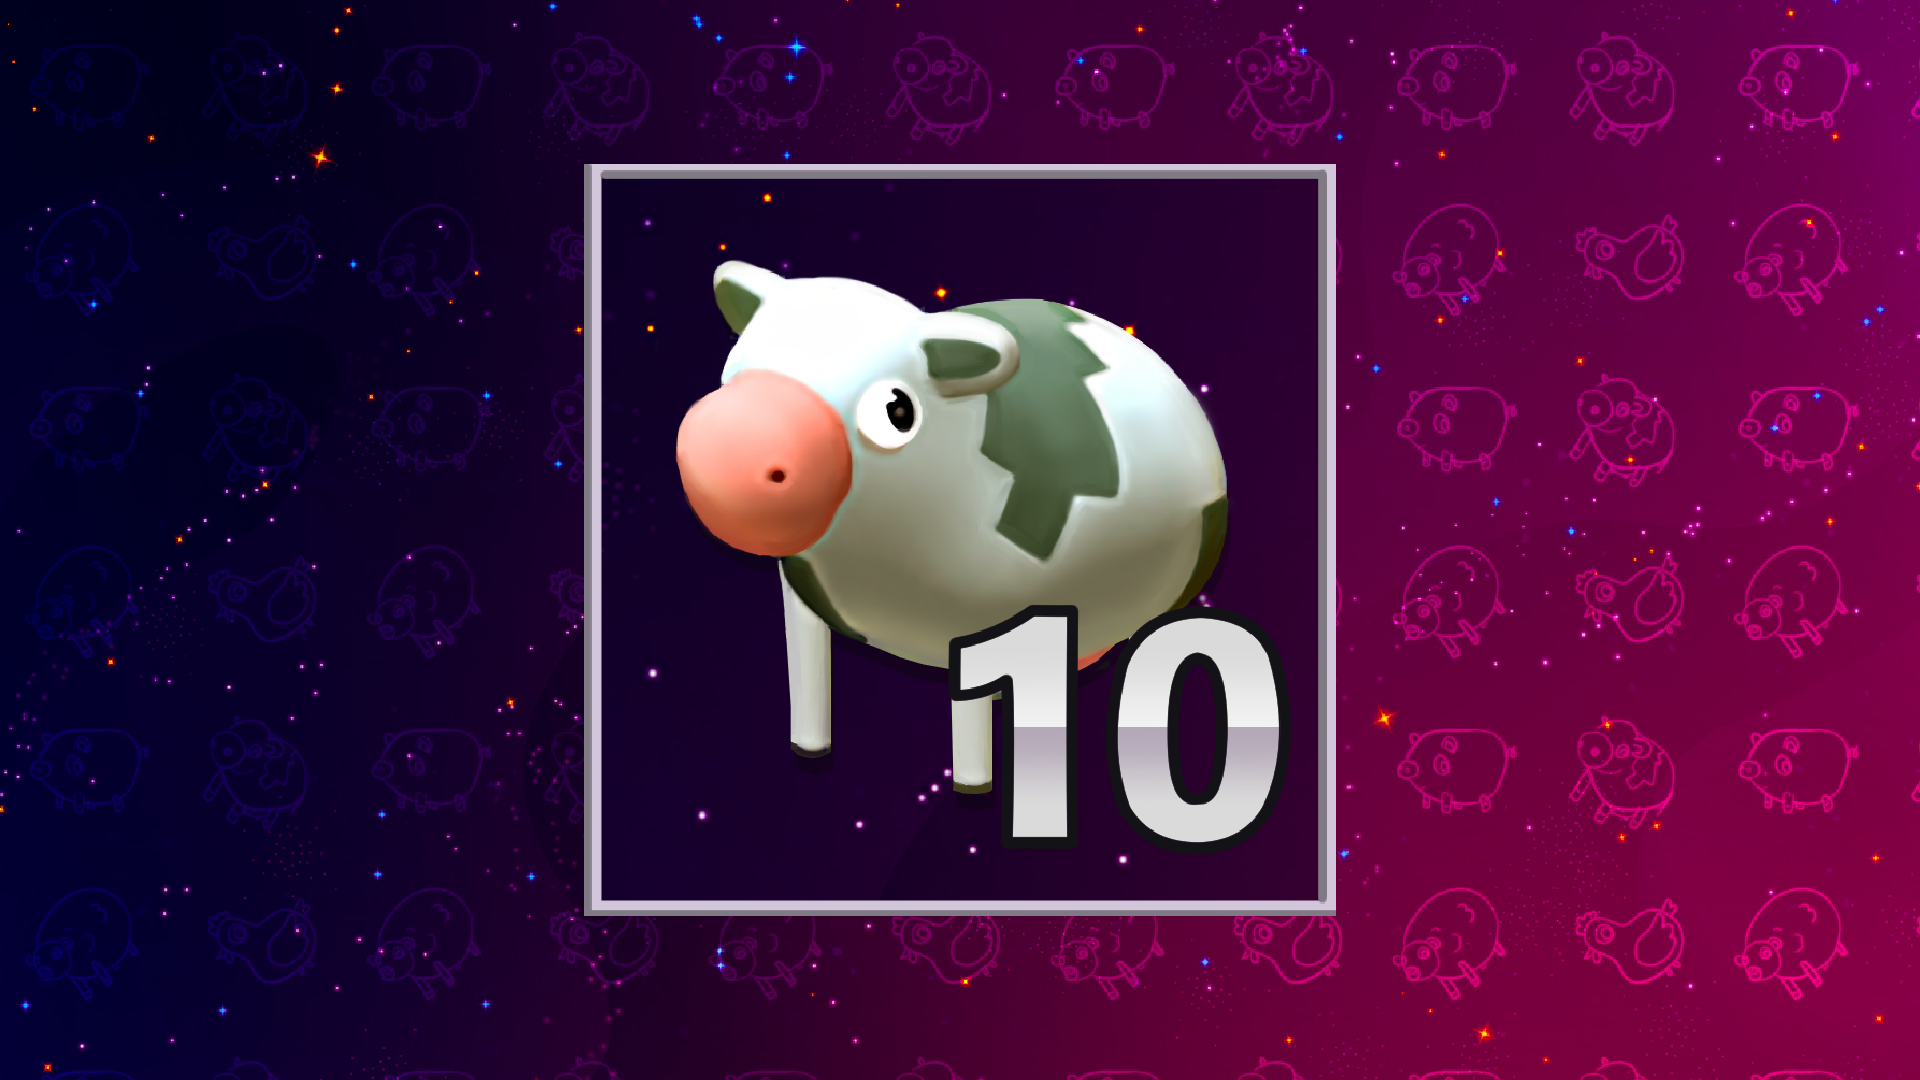 Icon for Cow farm